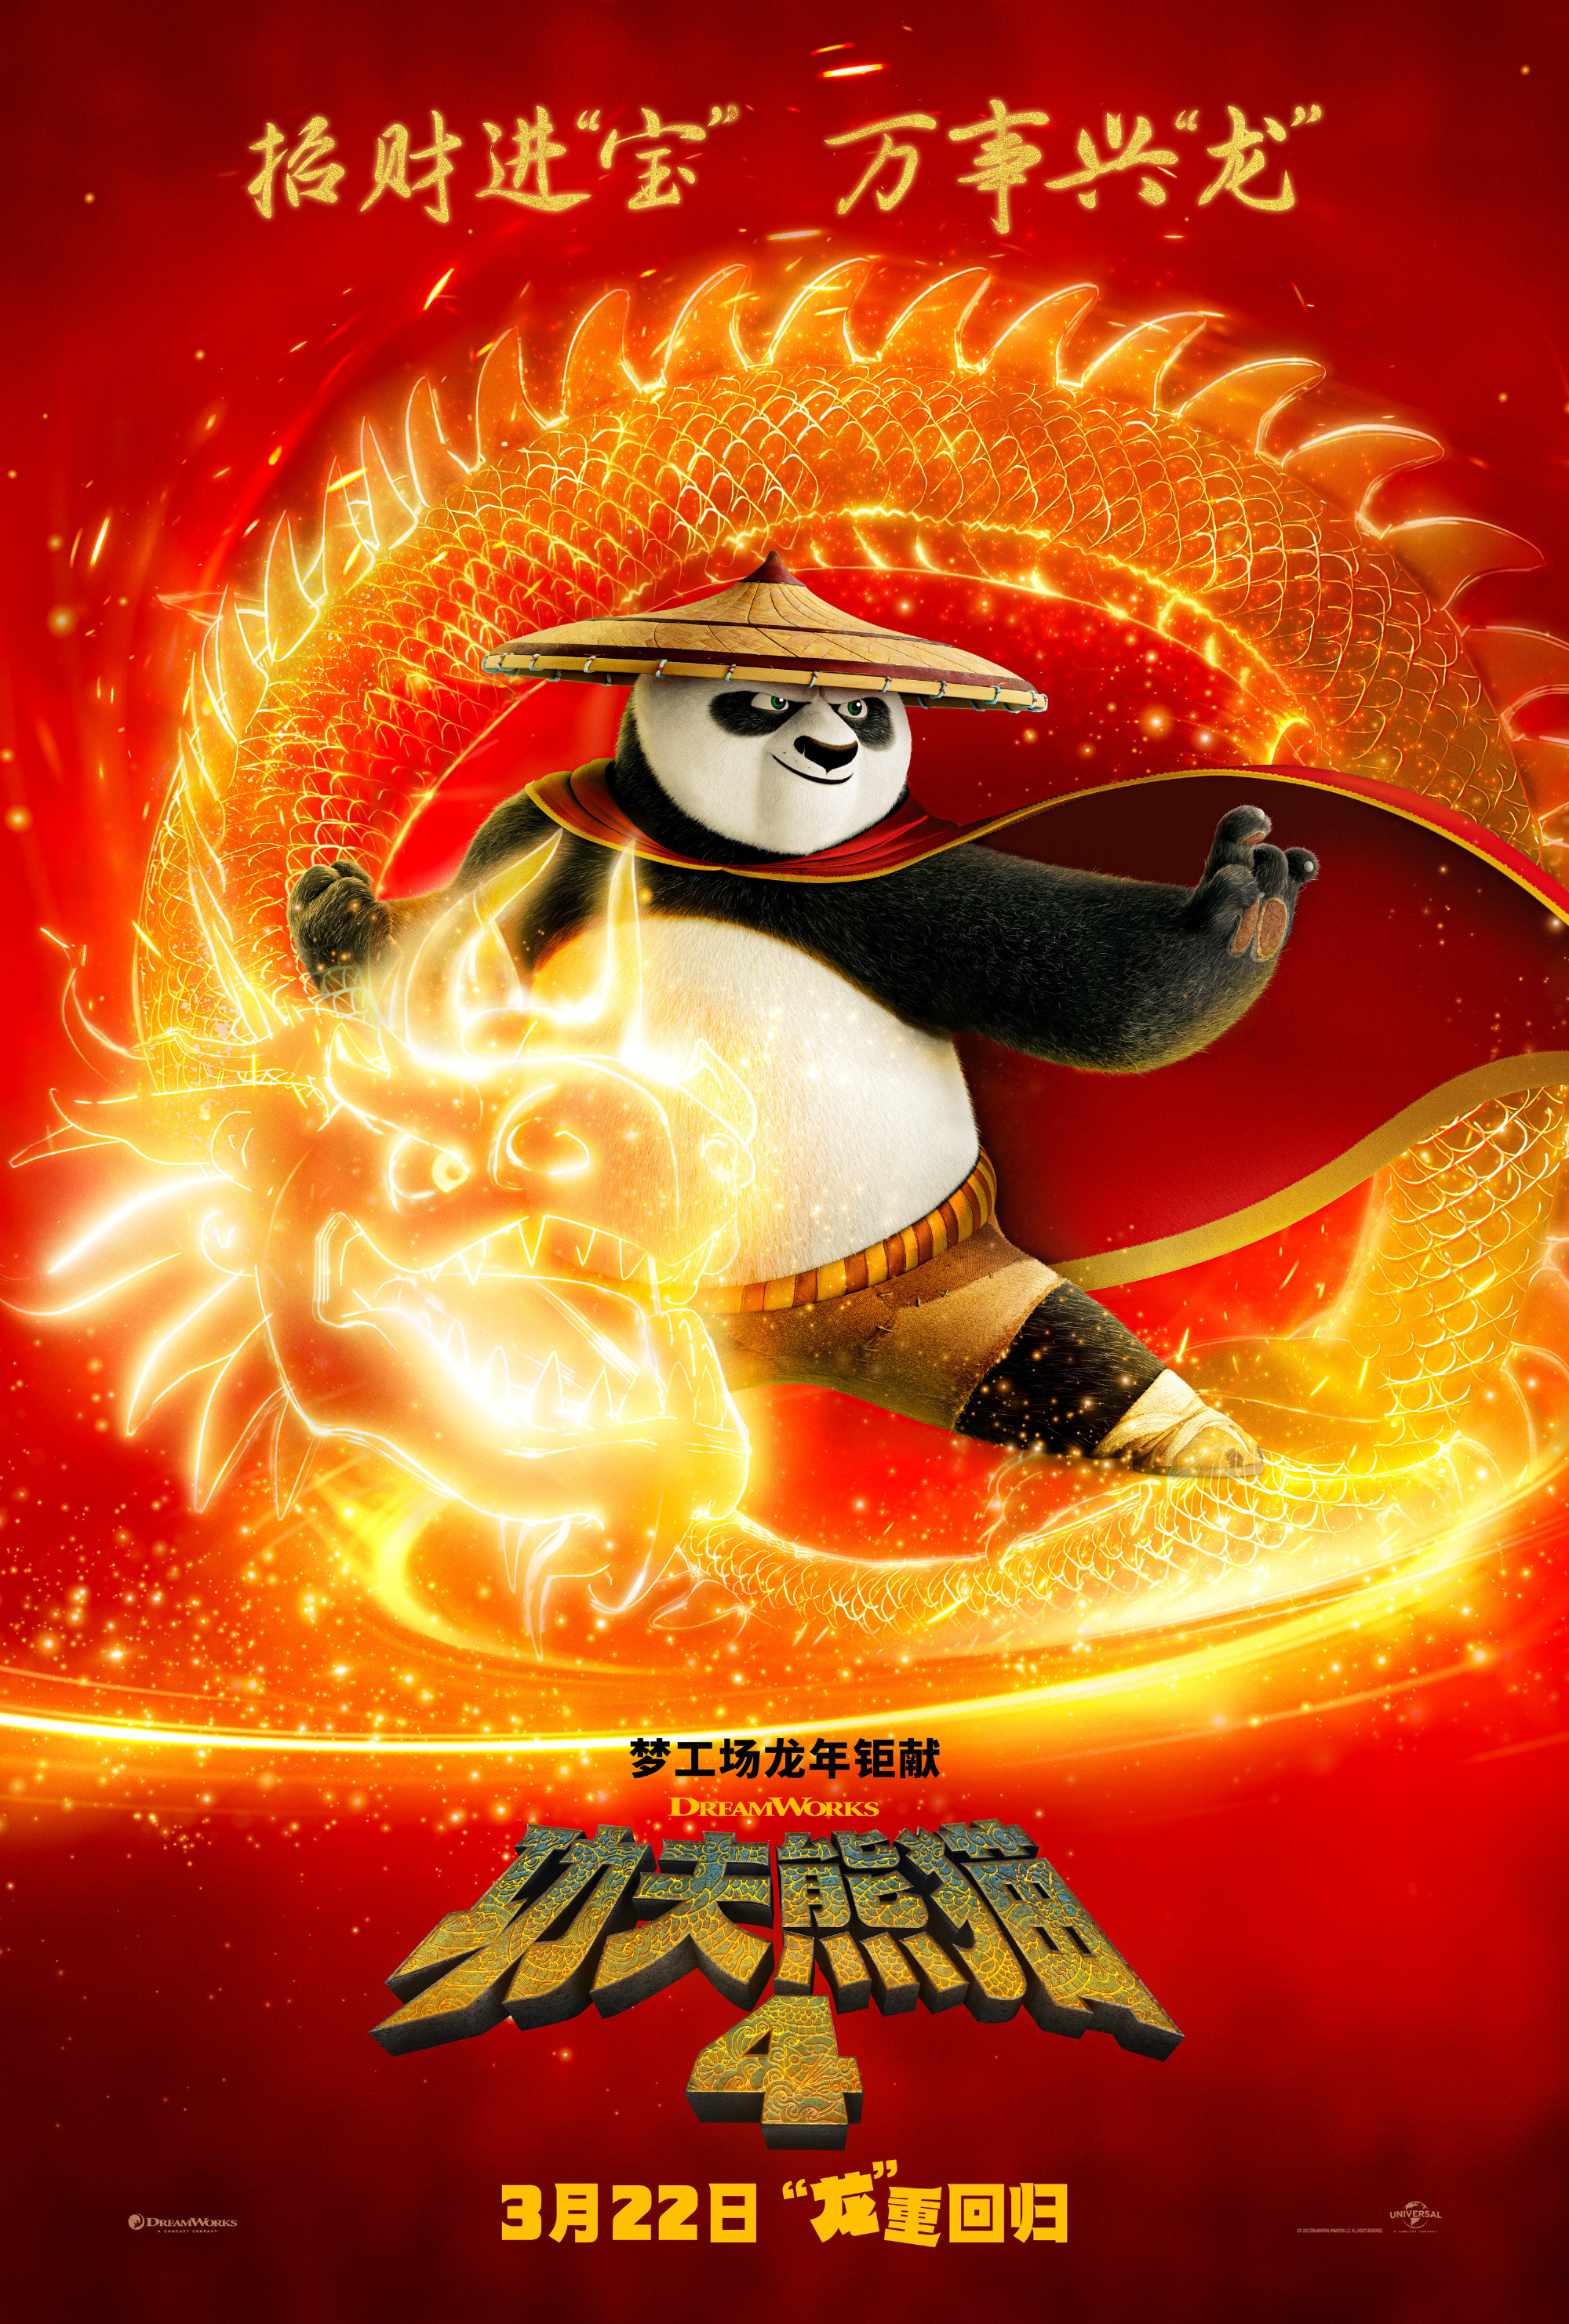 Mega Sized Movie Poster Image for Kung Fu Panda 4 (#11 of 20)